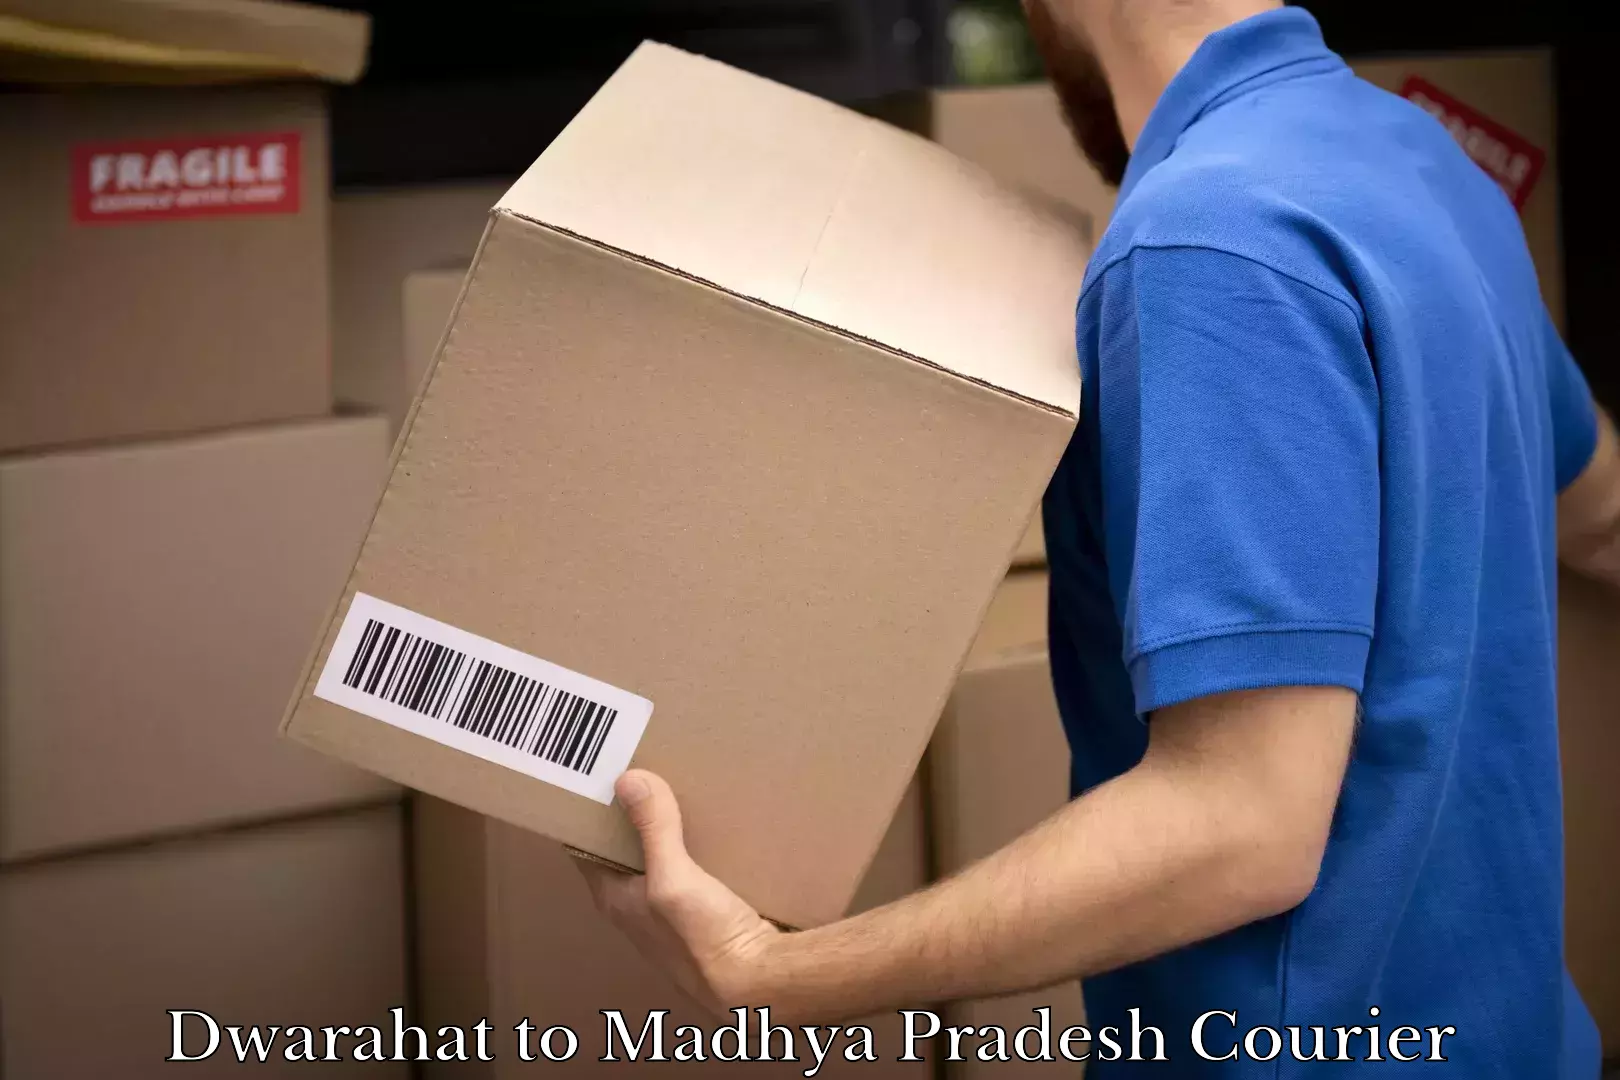 Global logistics network Dwarahat to Madhya Pradesh